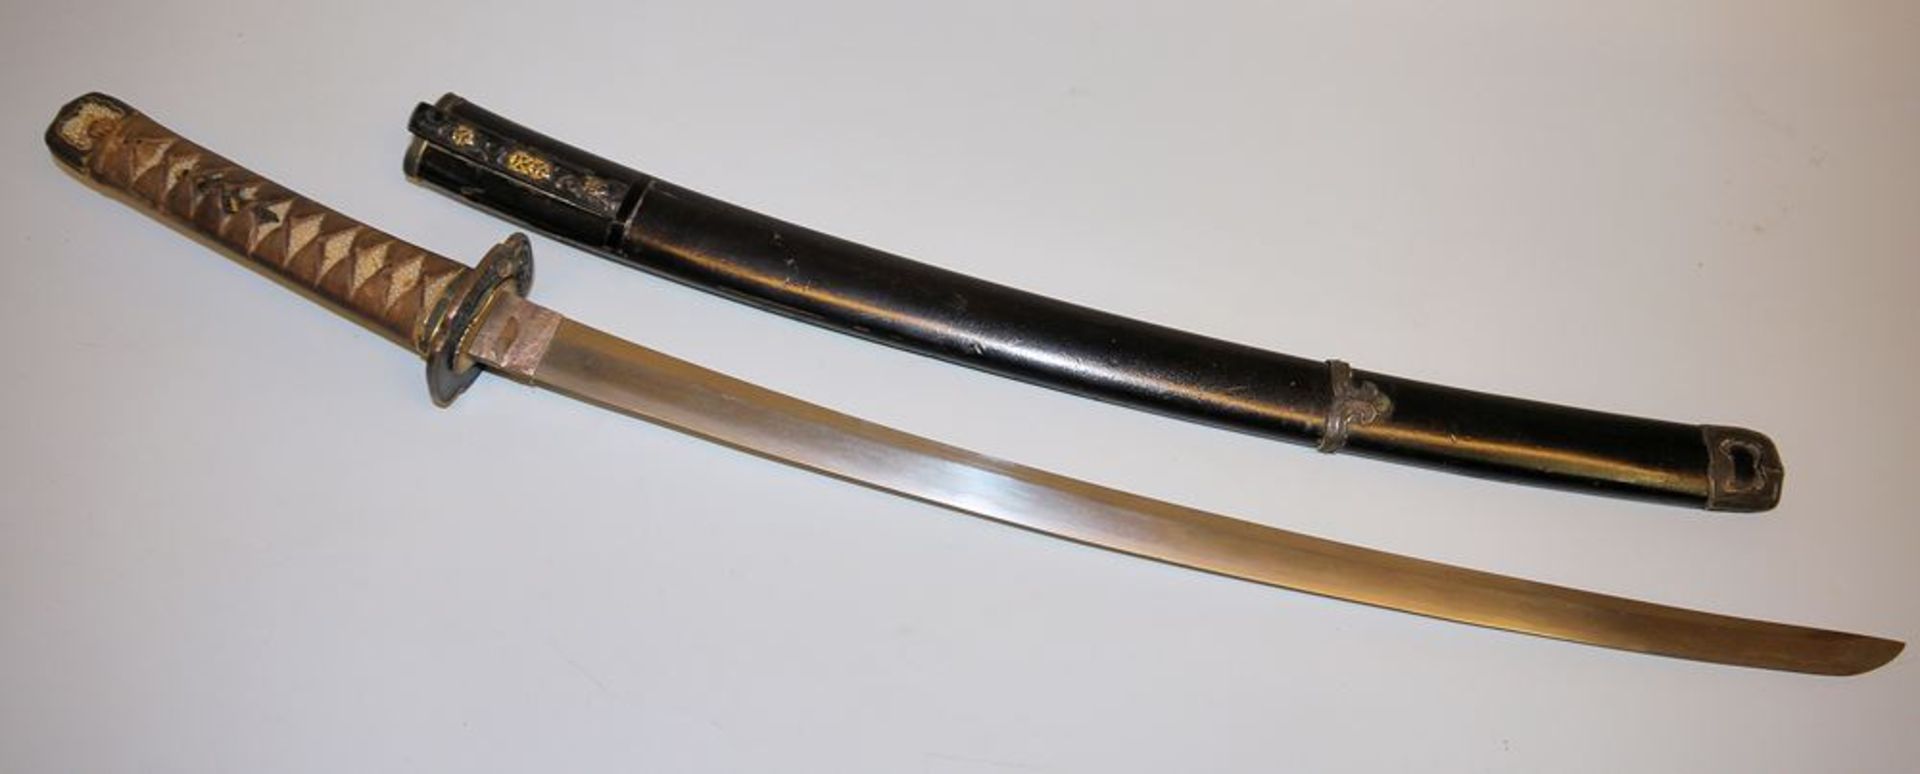 Wakizashi, Japanese sword of the Edo-Meiji period